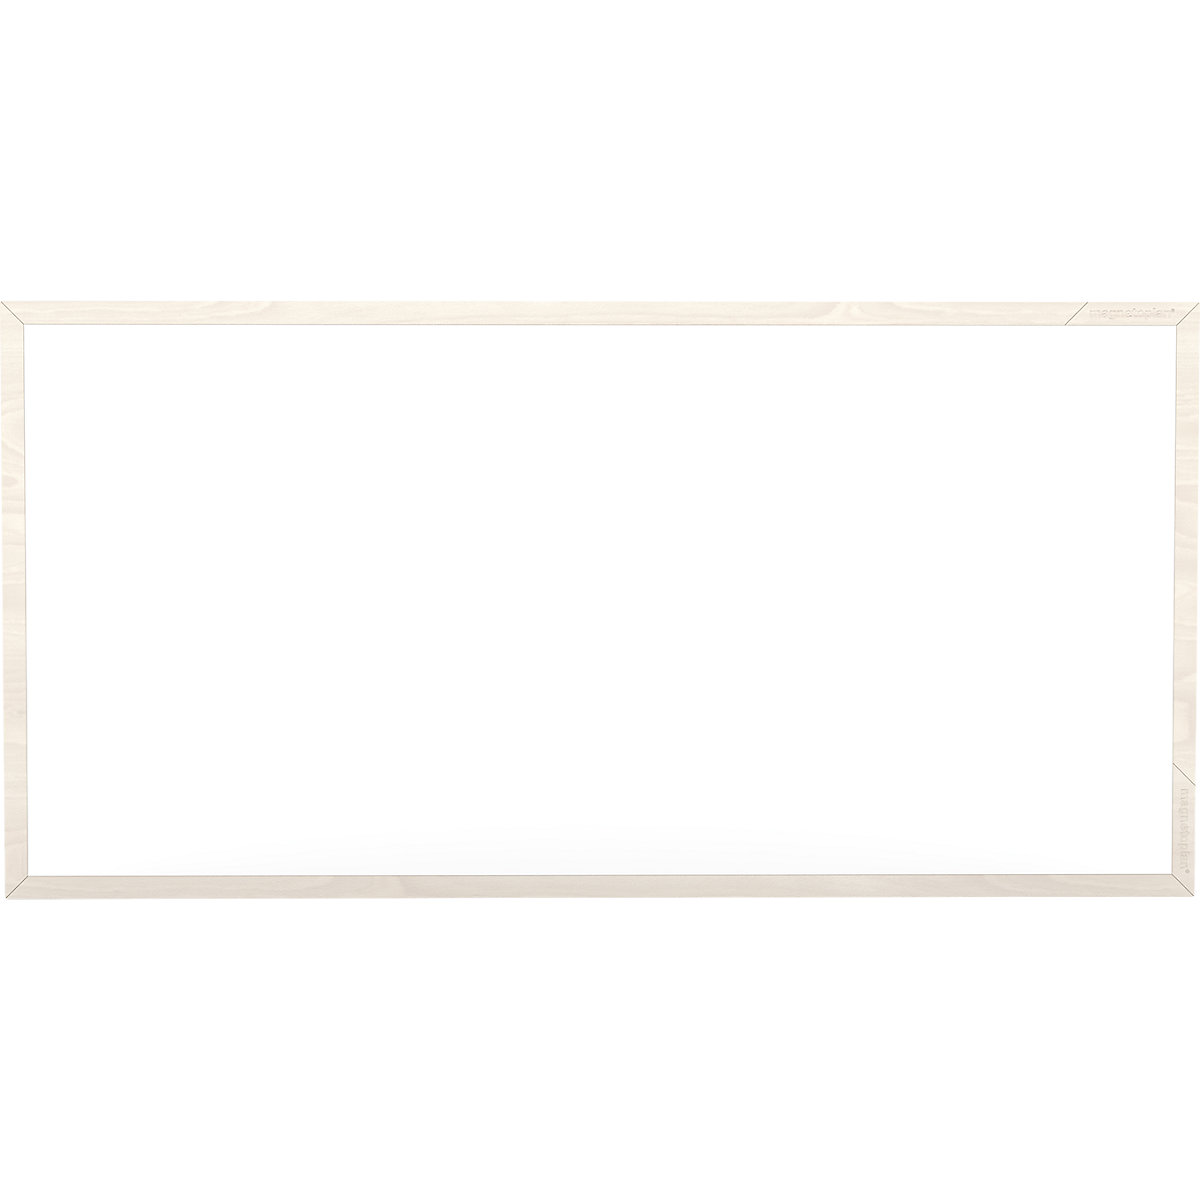 Designerska biała tablica z serii Wood - magnetoplan